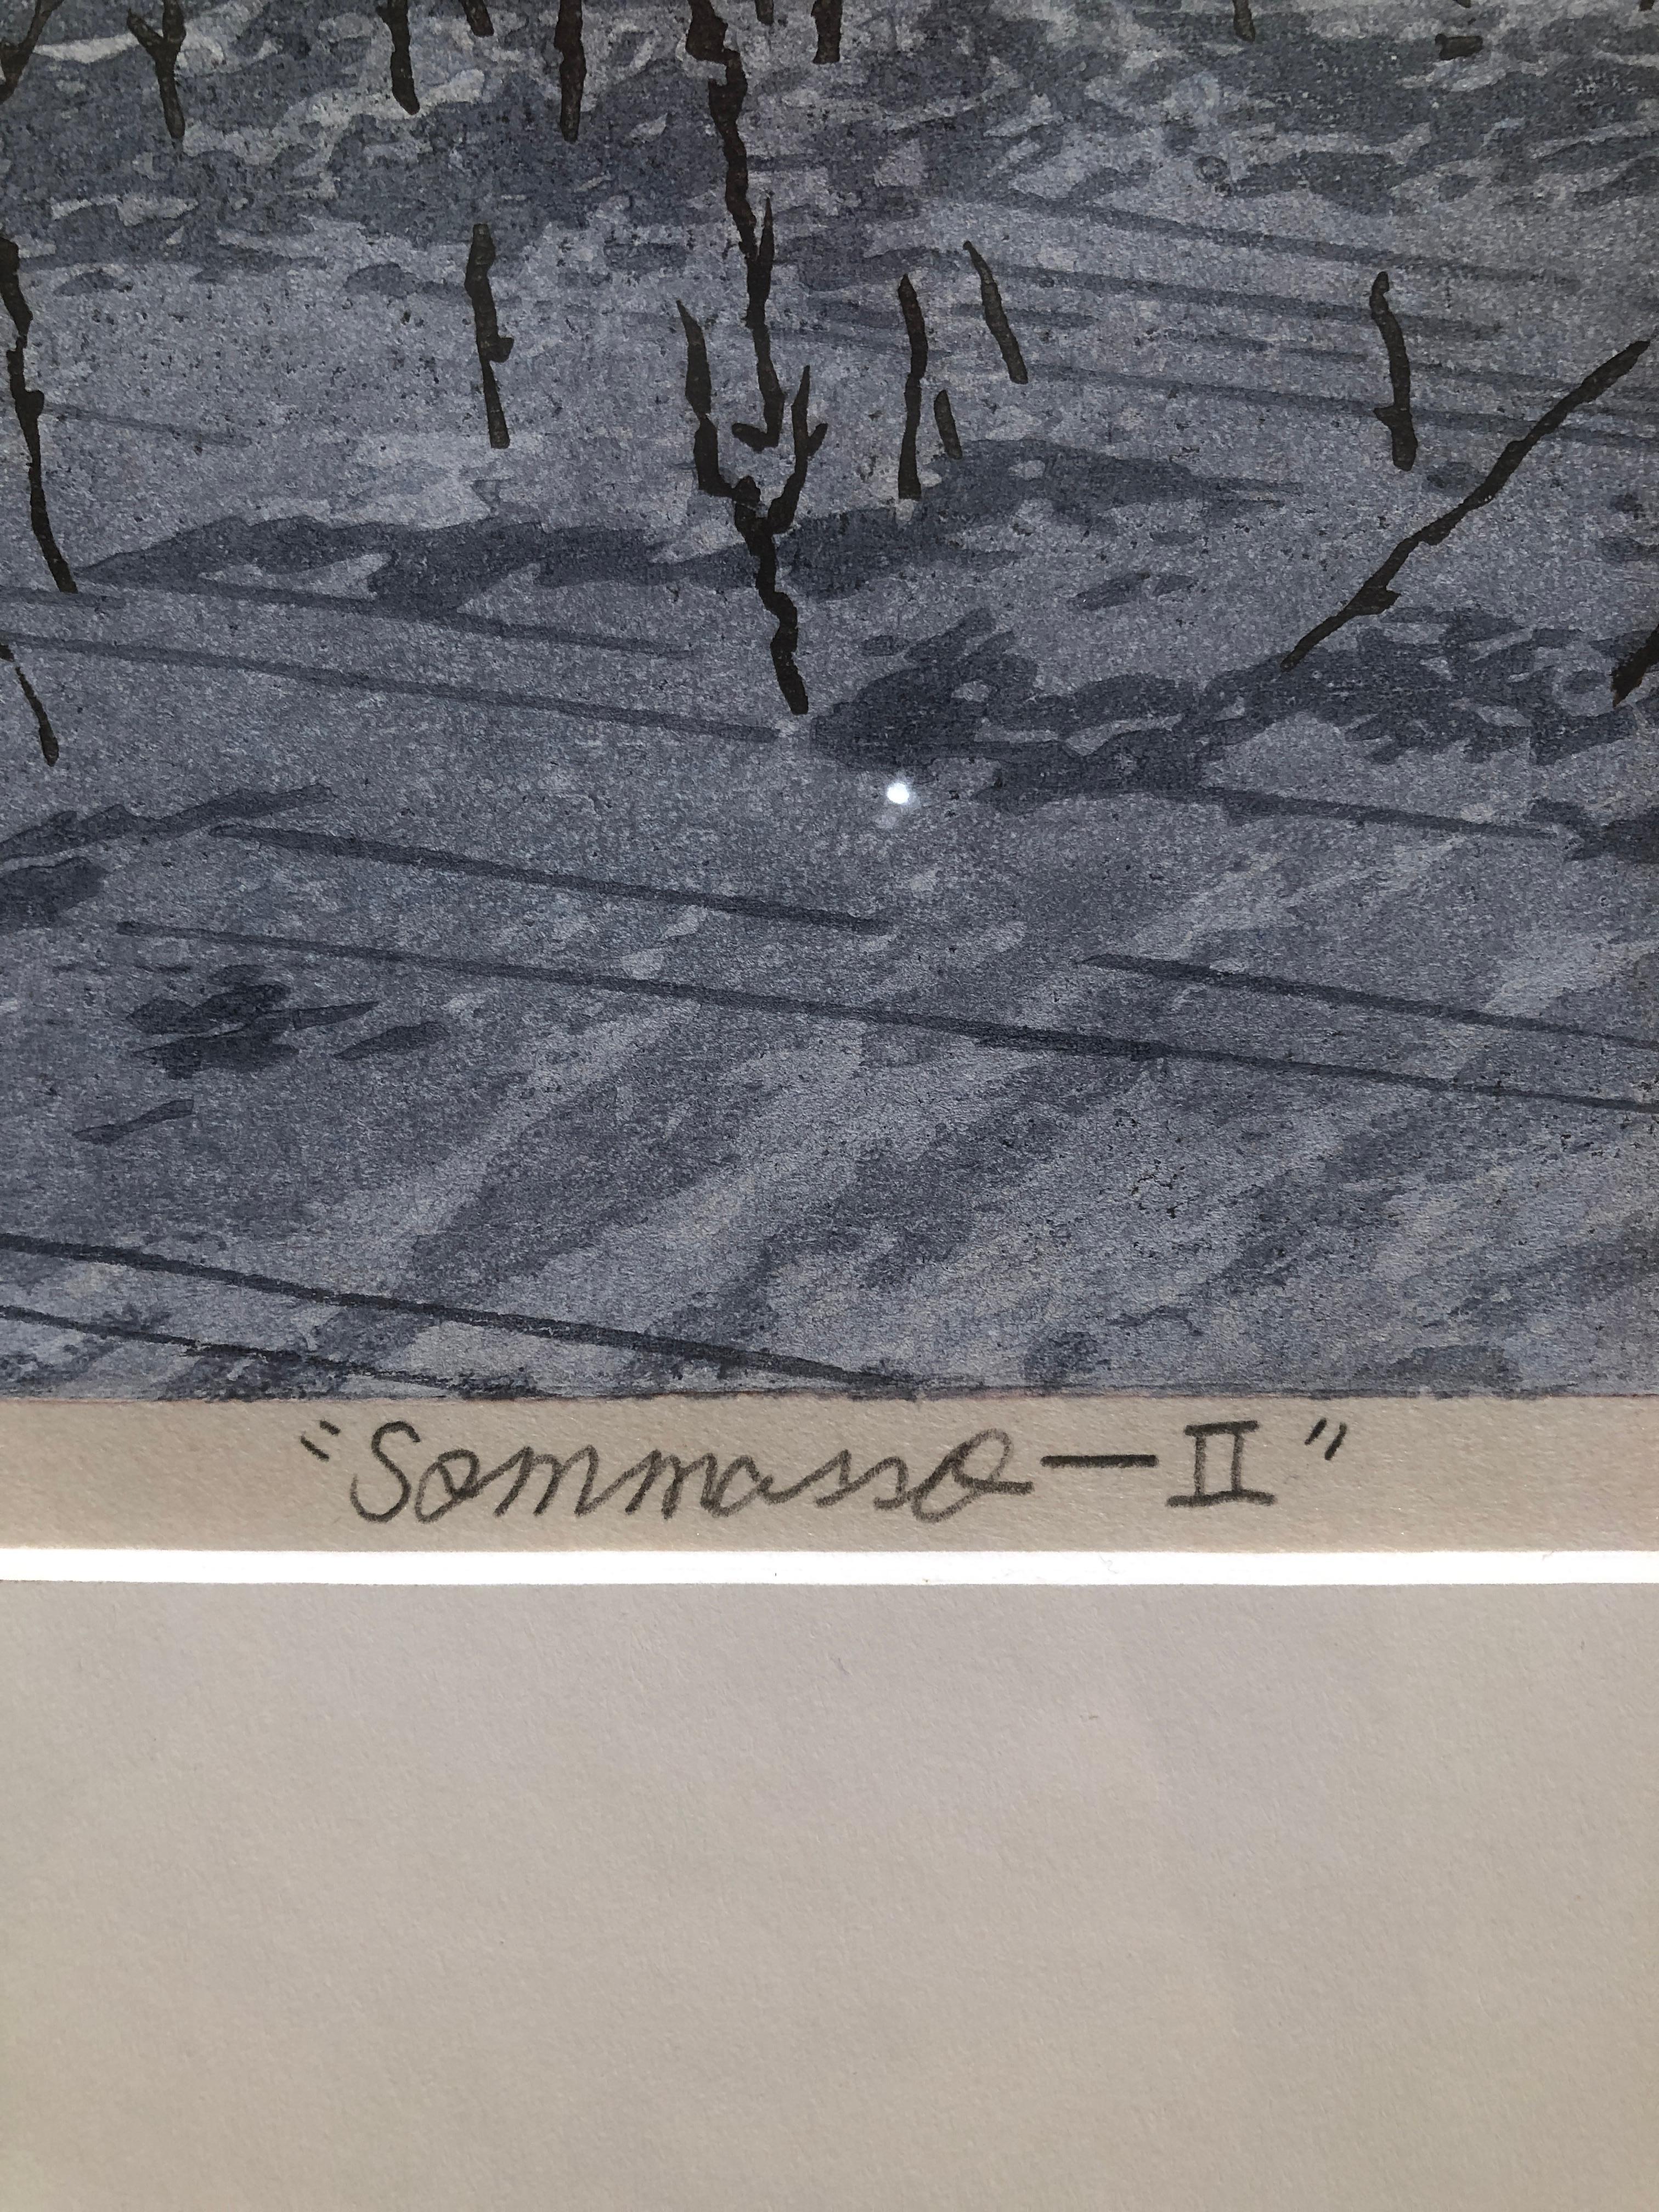 Sommesso II, blue and gray Ukiyo-e landscape woodblock print, 2016 - Contemporary Print by Keiji Shinohara